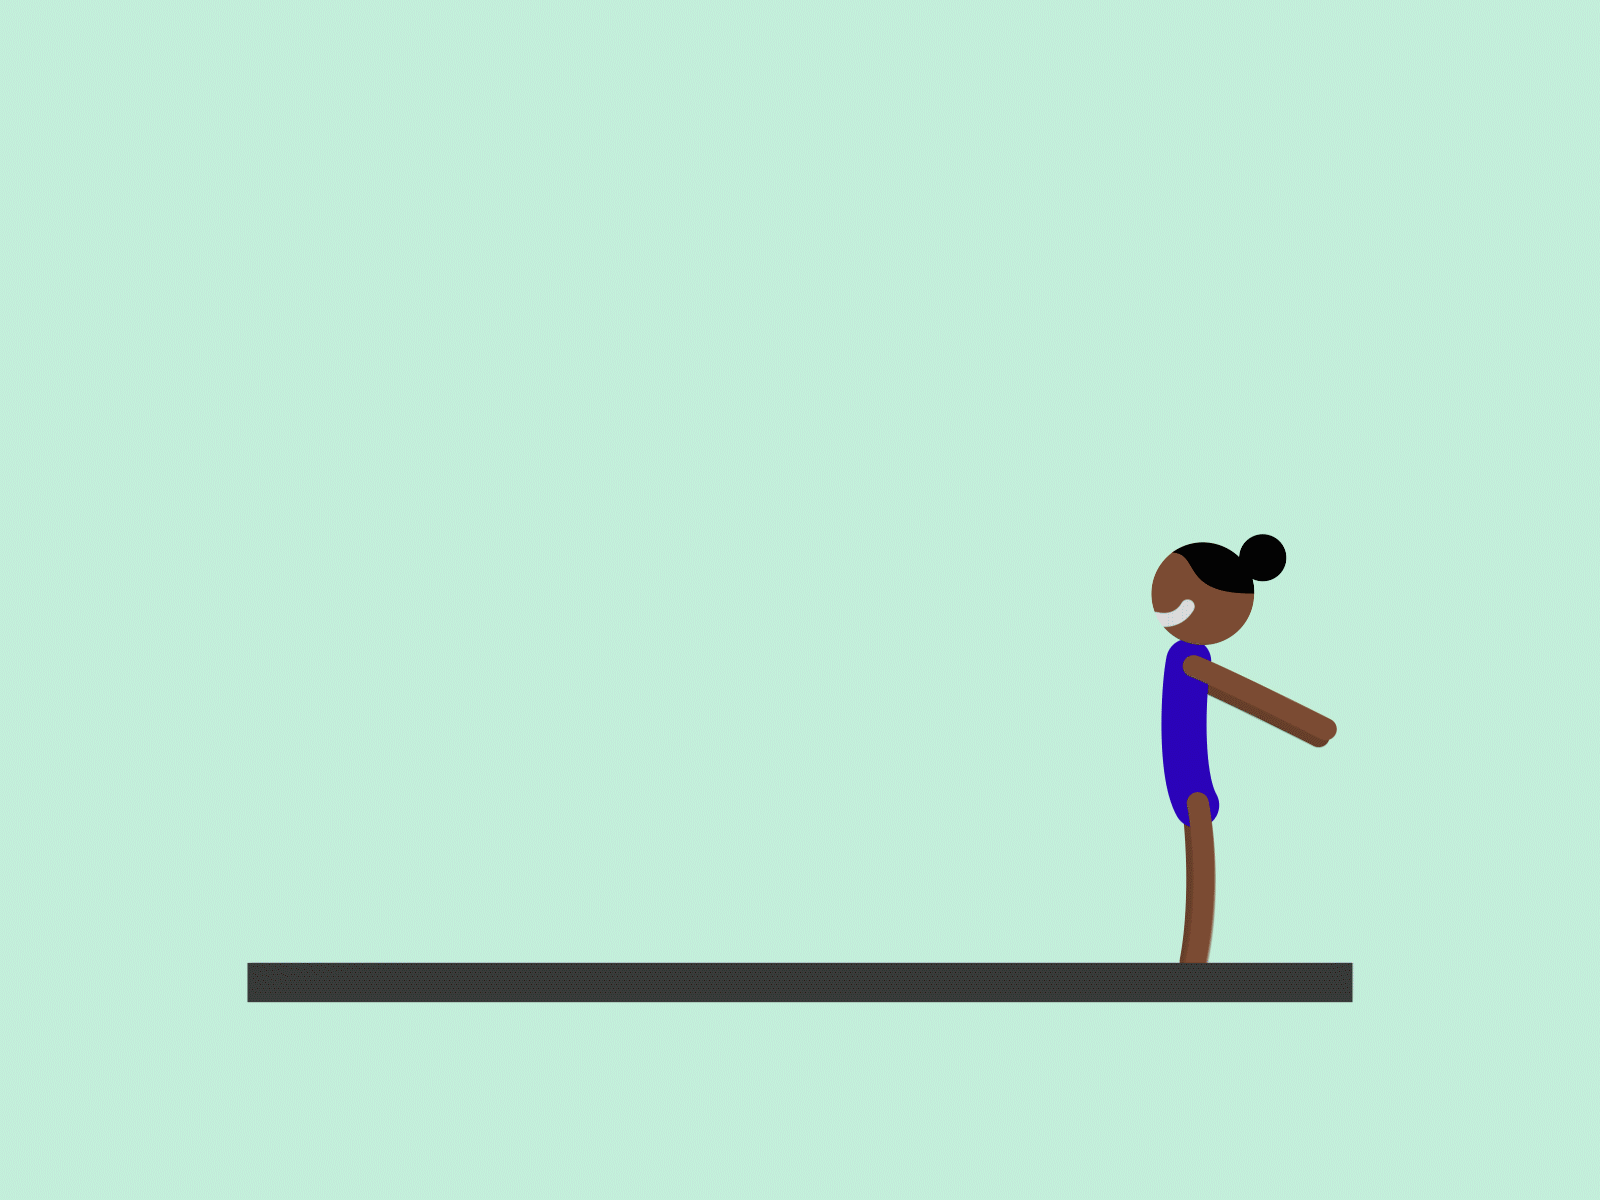 Gymnastics Girl by Mohamed Shone on Dribbble